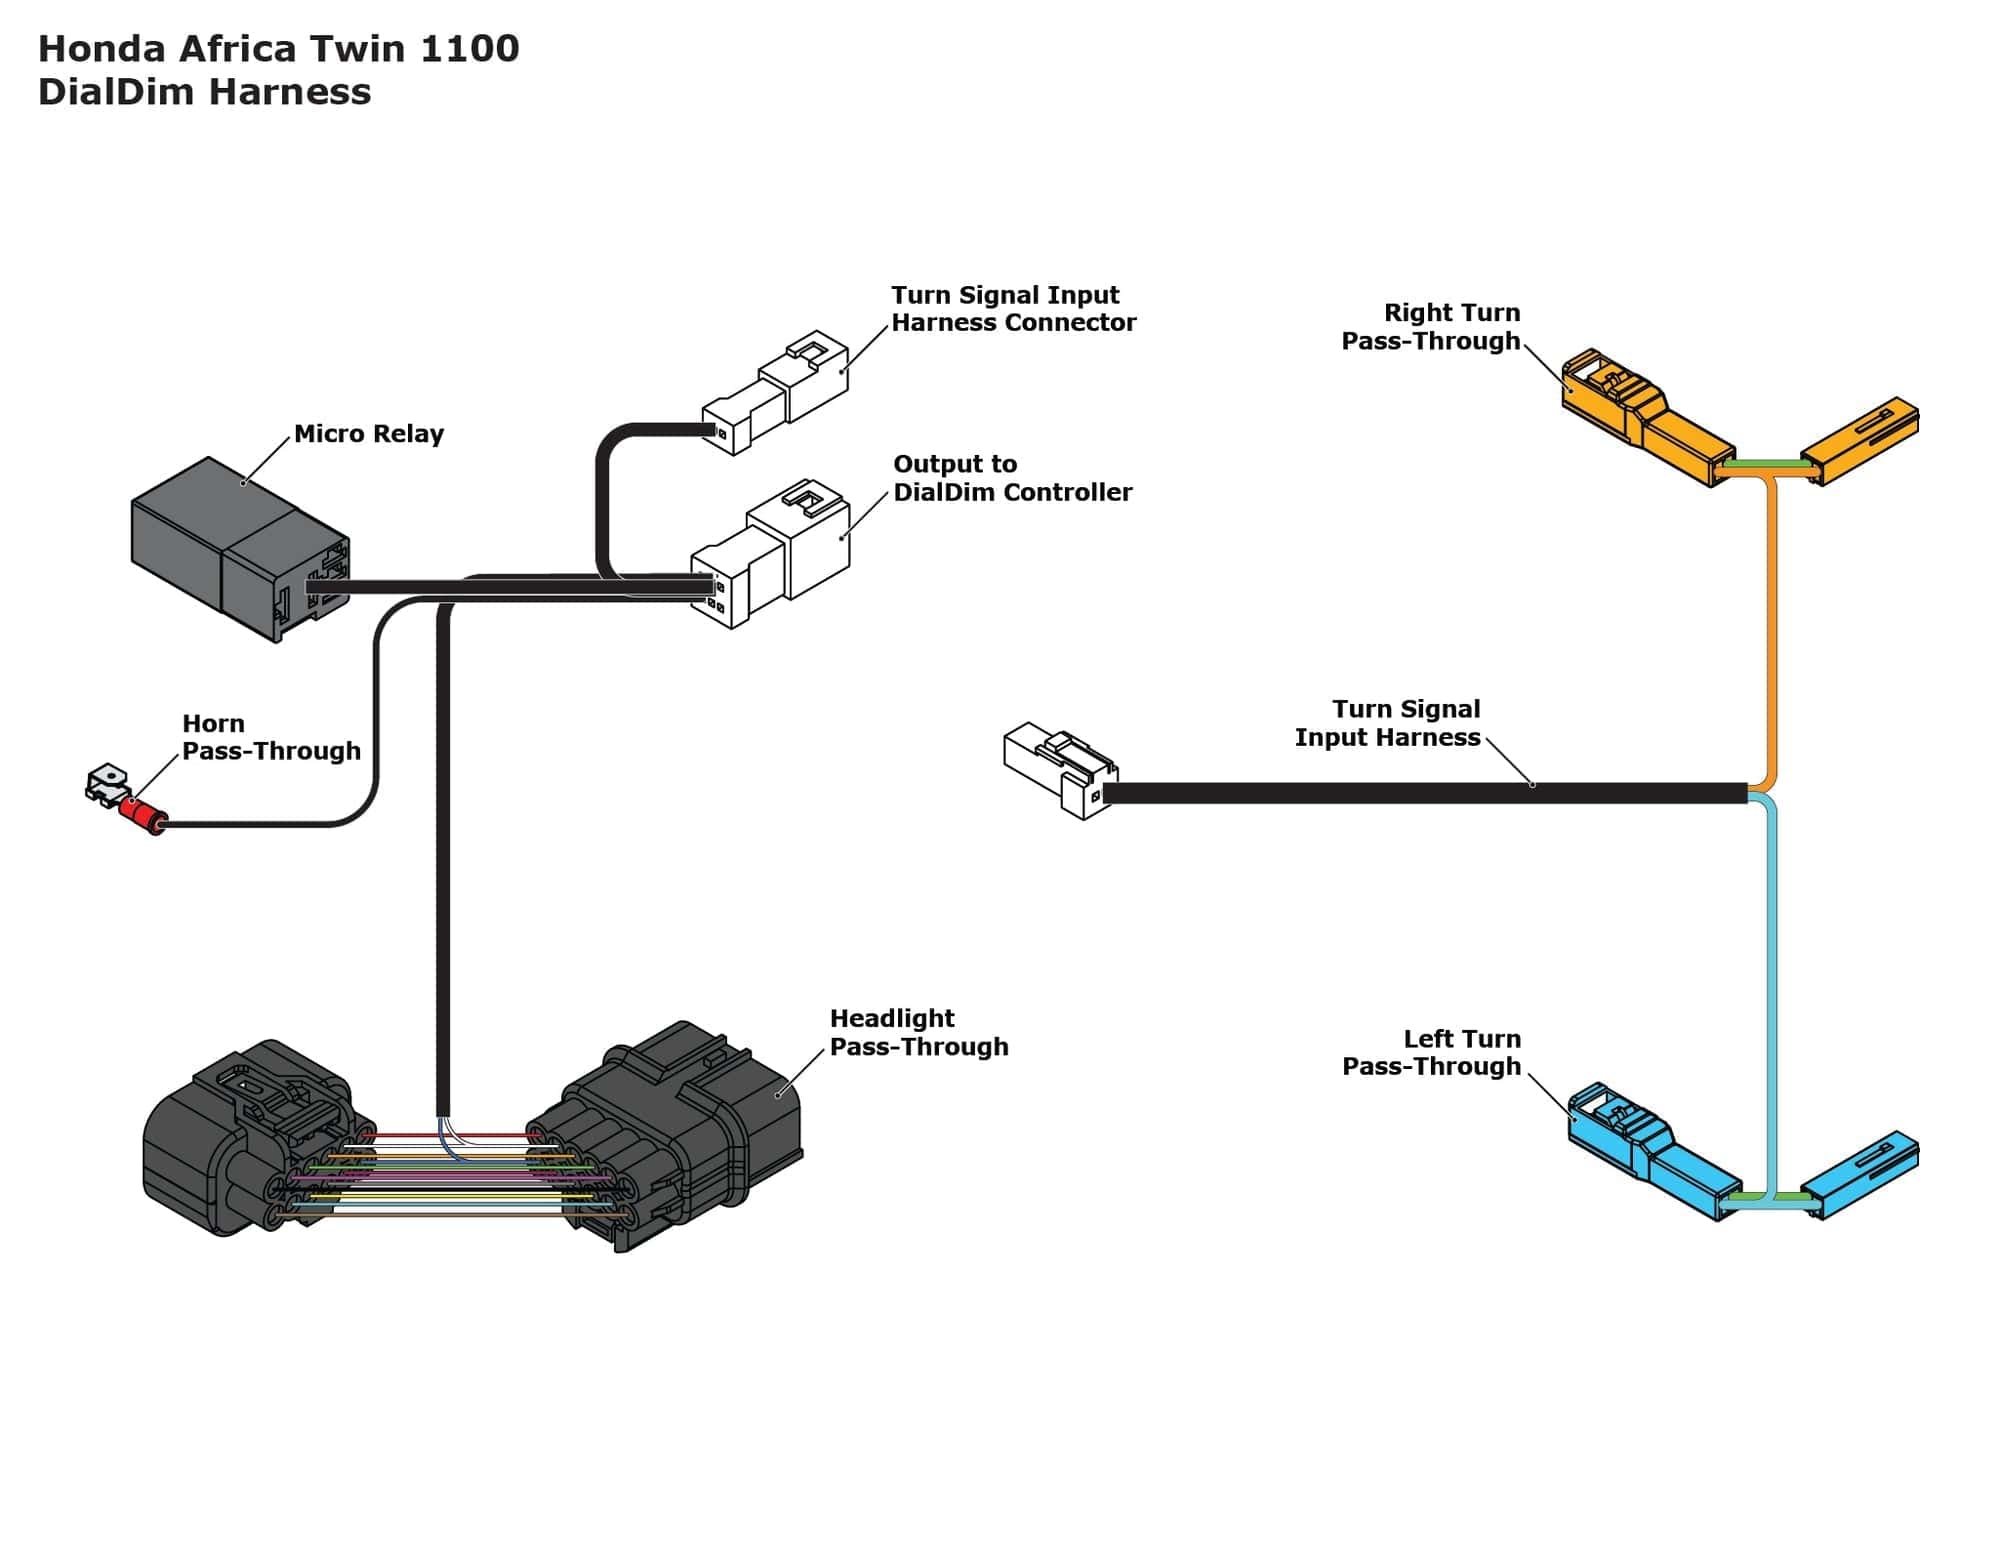 Denali Accessory Management Plug-&-Play DialDim Wiring Adaptor for Honda Africa Twin 1100